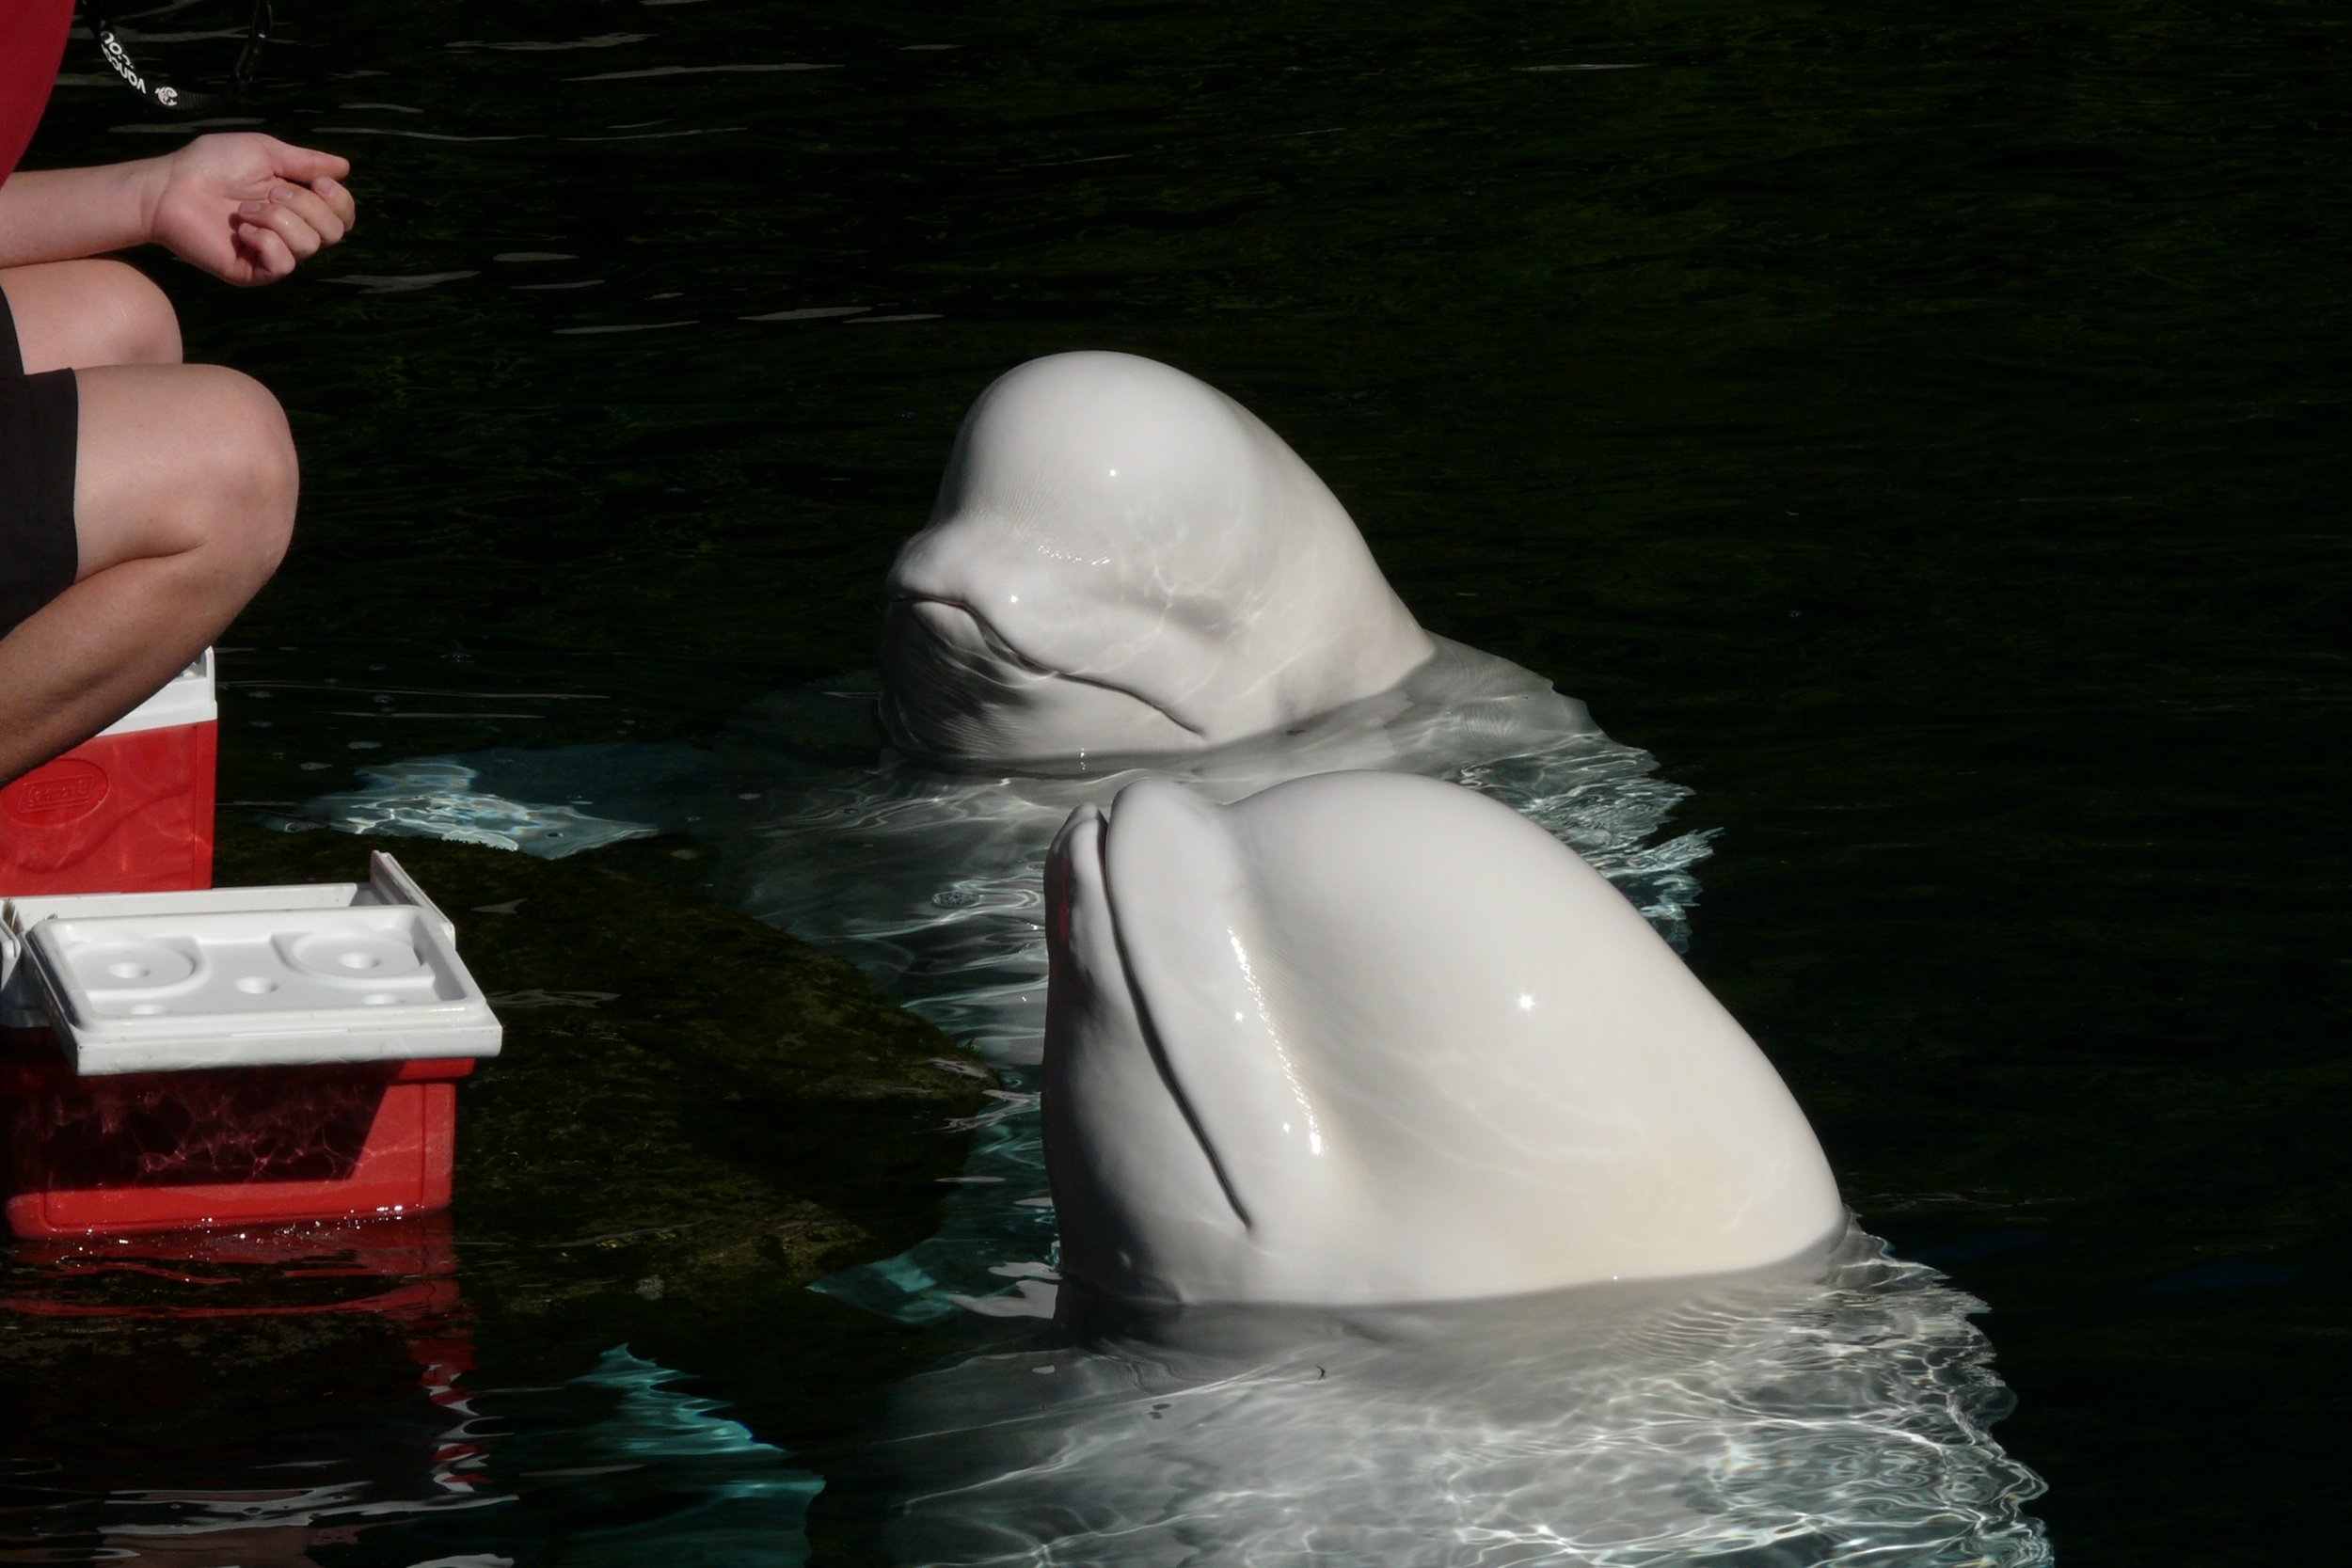 Beluga whales in an aquarium, photo by Michael Lech